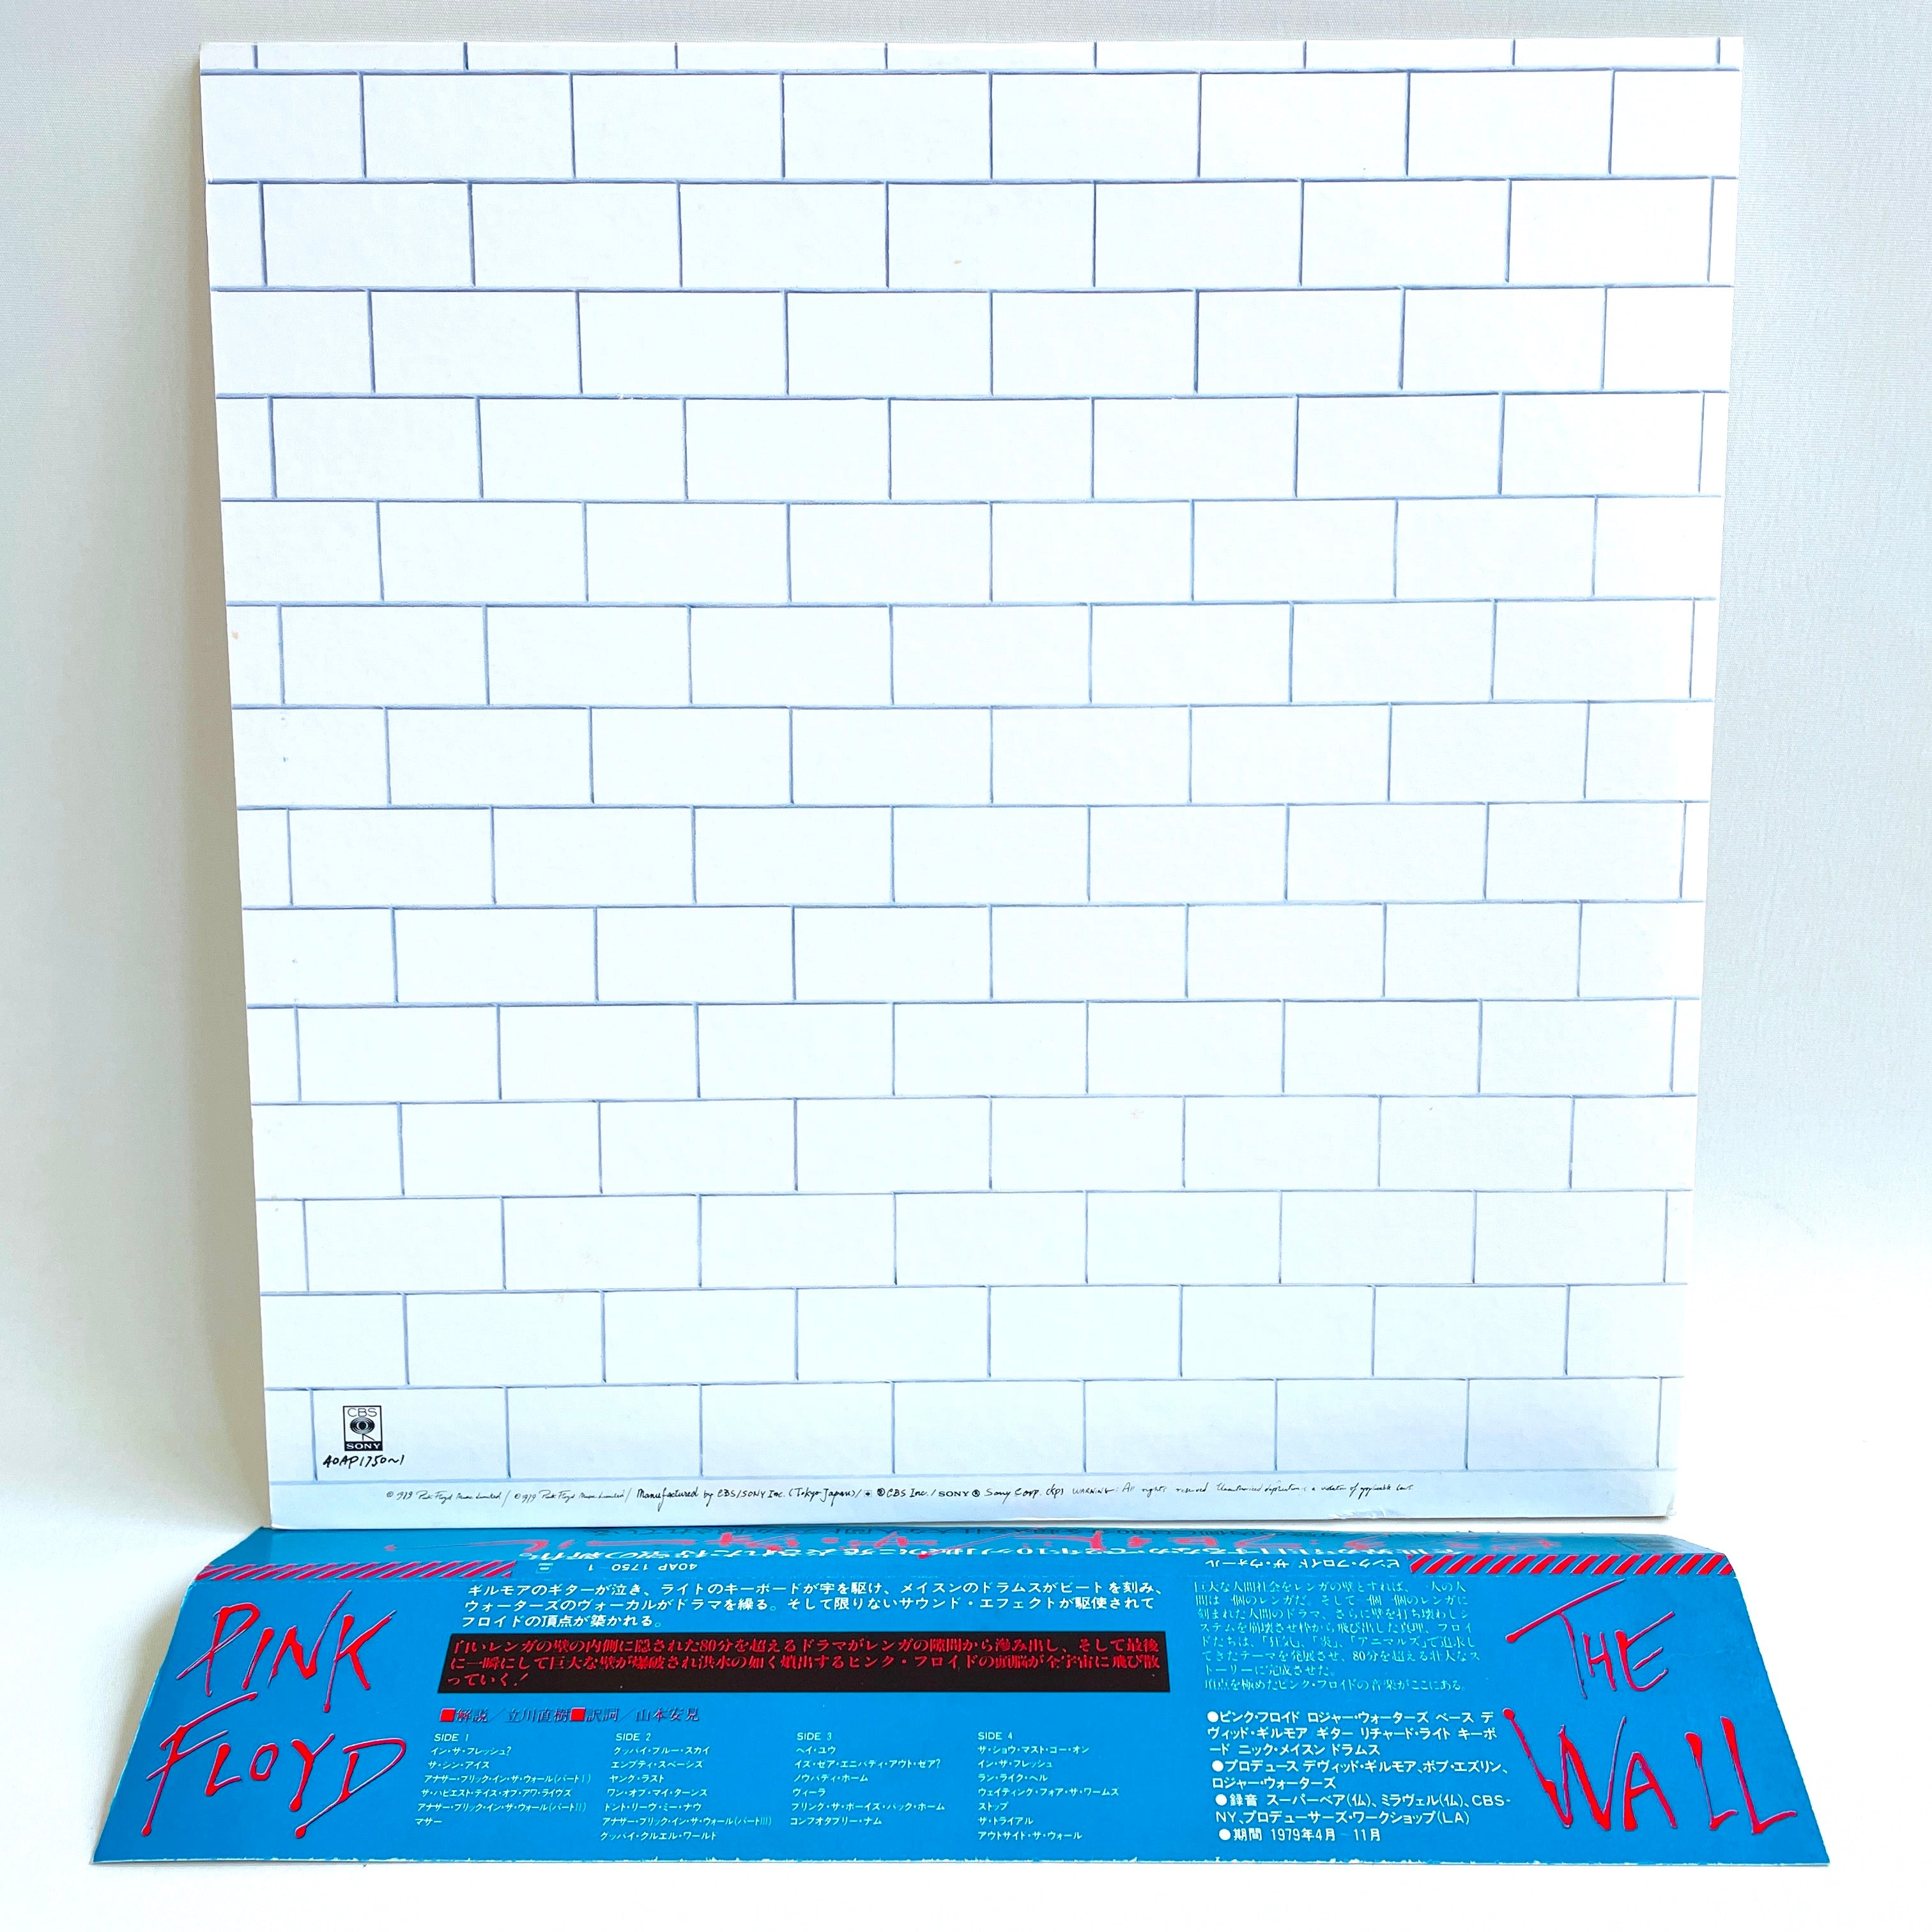 Pink Floyd The Wall CBS/Sony 40AP 1750 2 – Portal Records